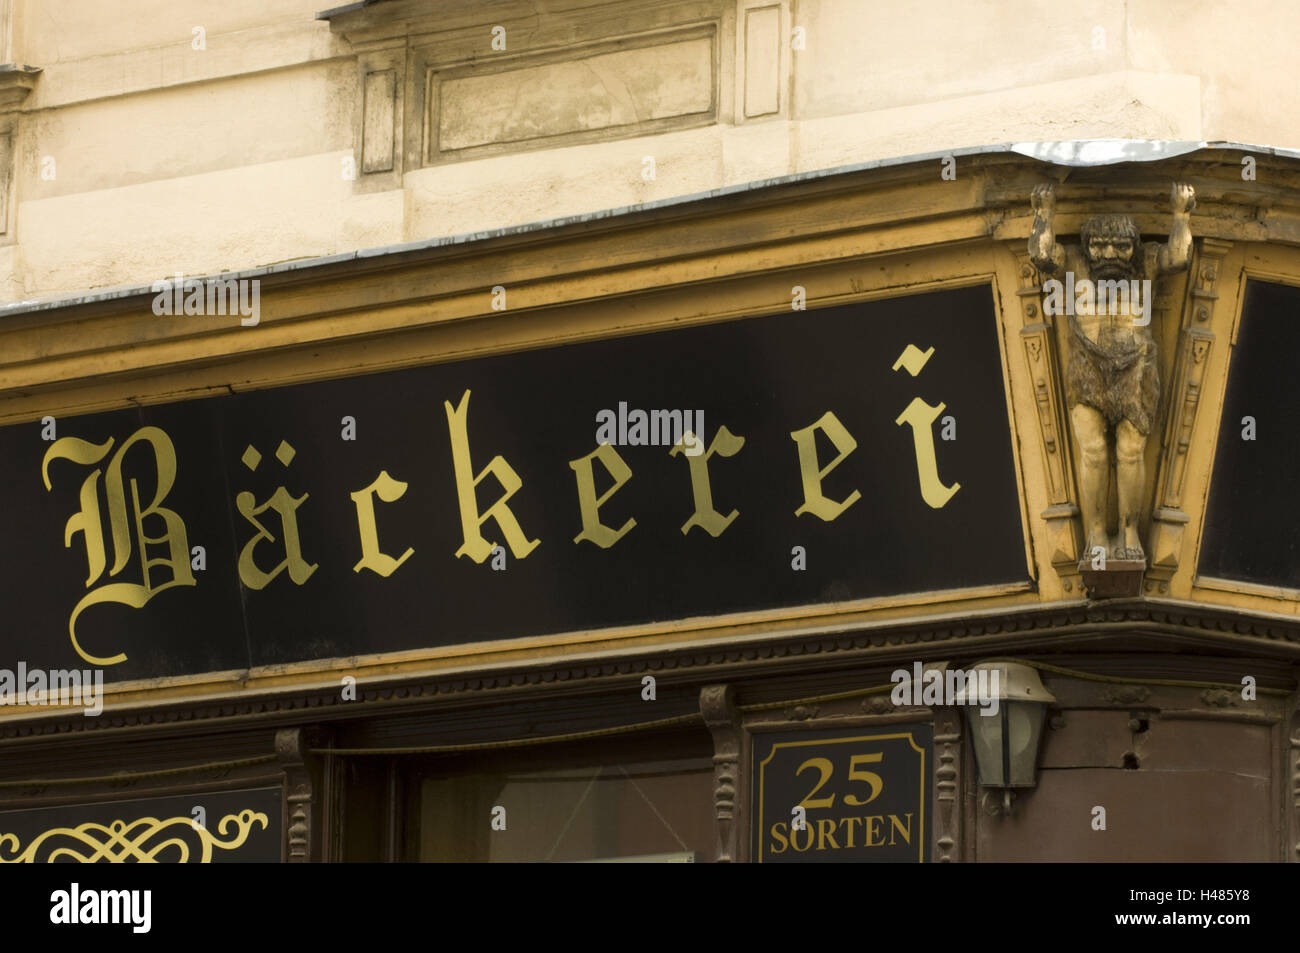 Austria, Vienna, mountain Spittel, castle lane 29, old house facade with baker's sign, Stock Photo